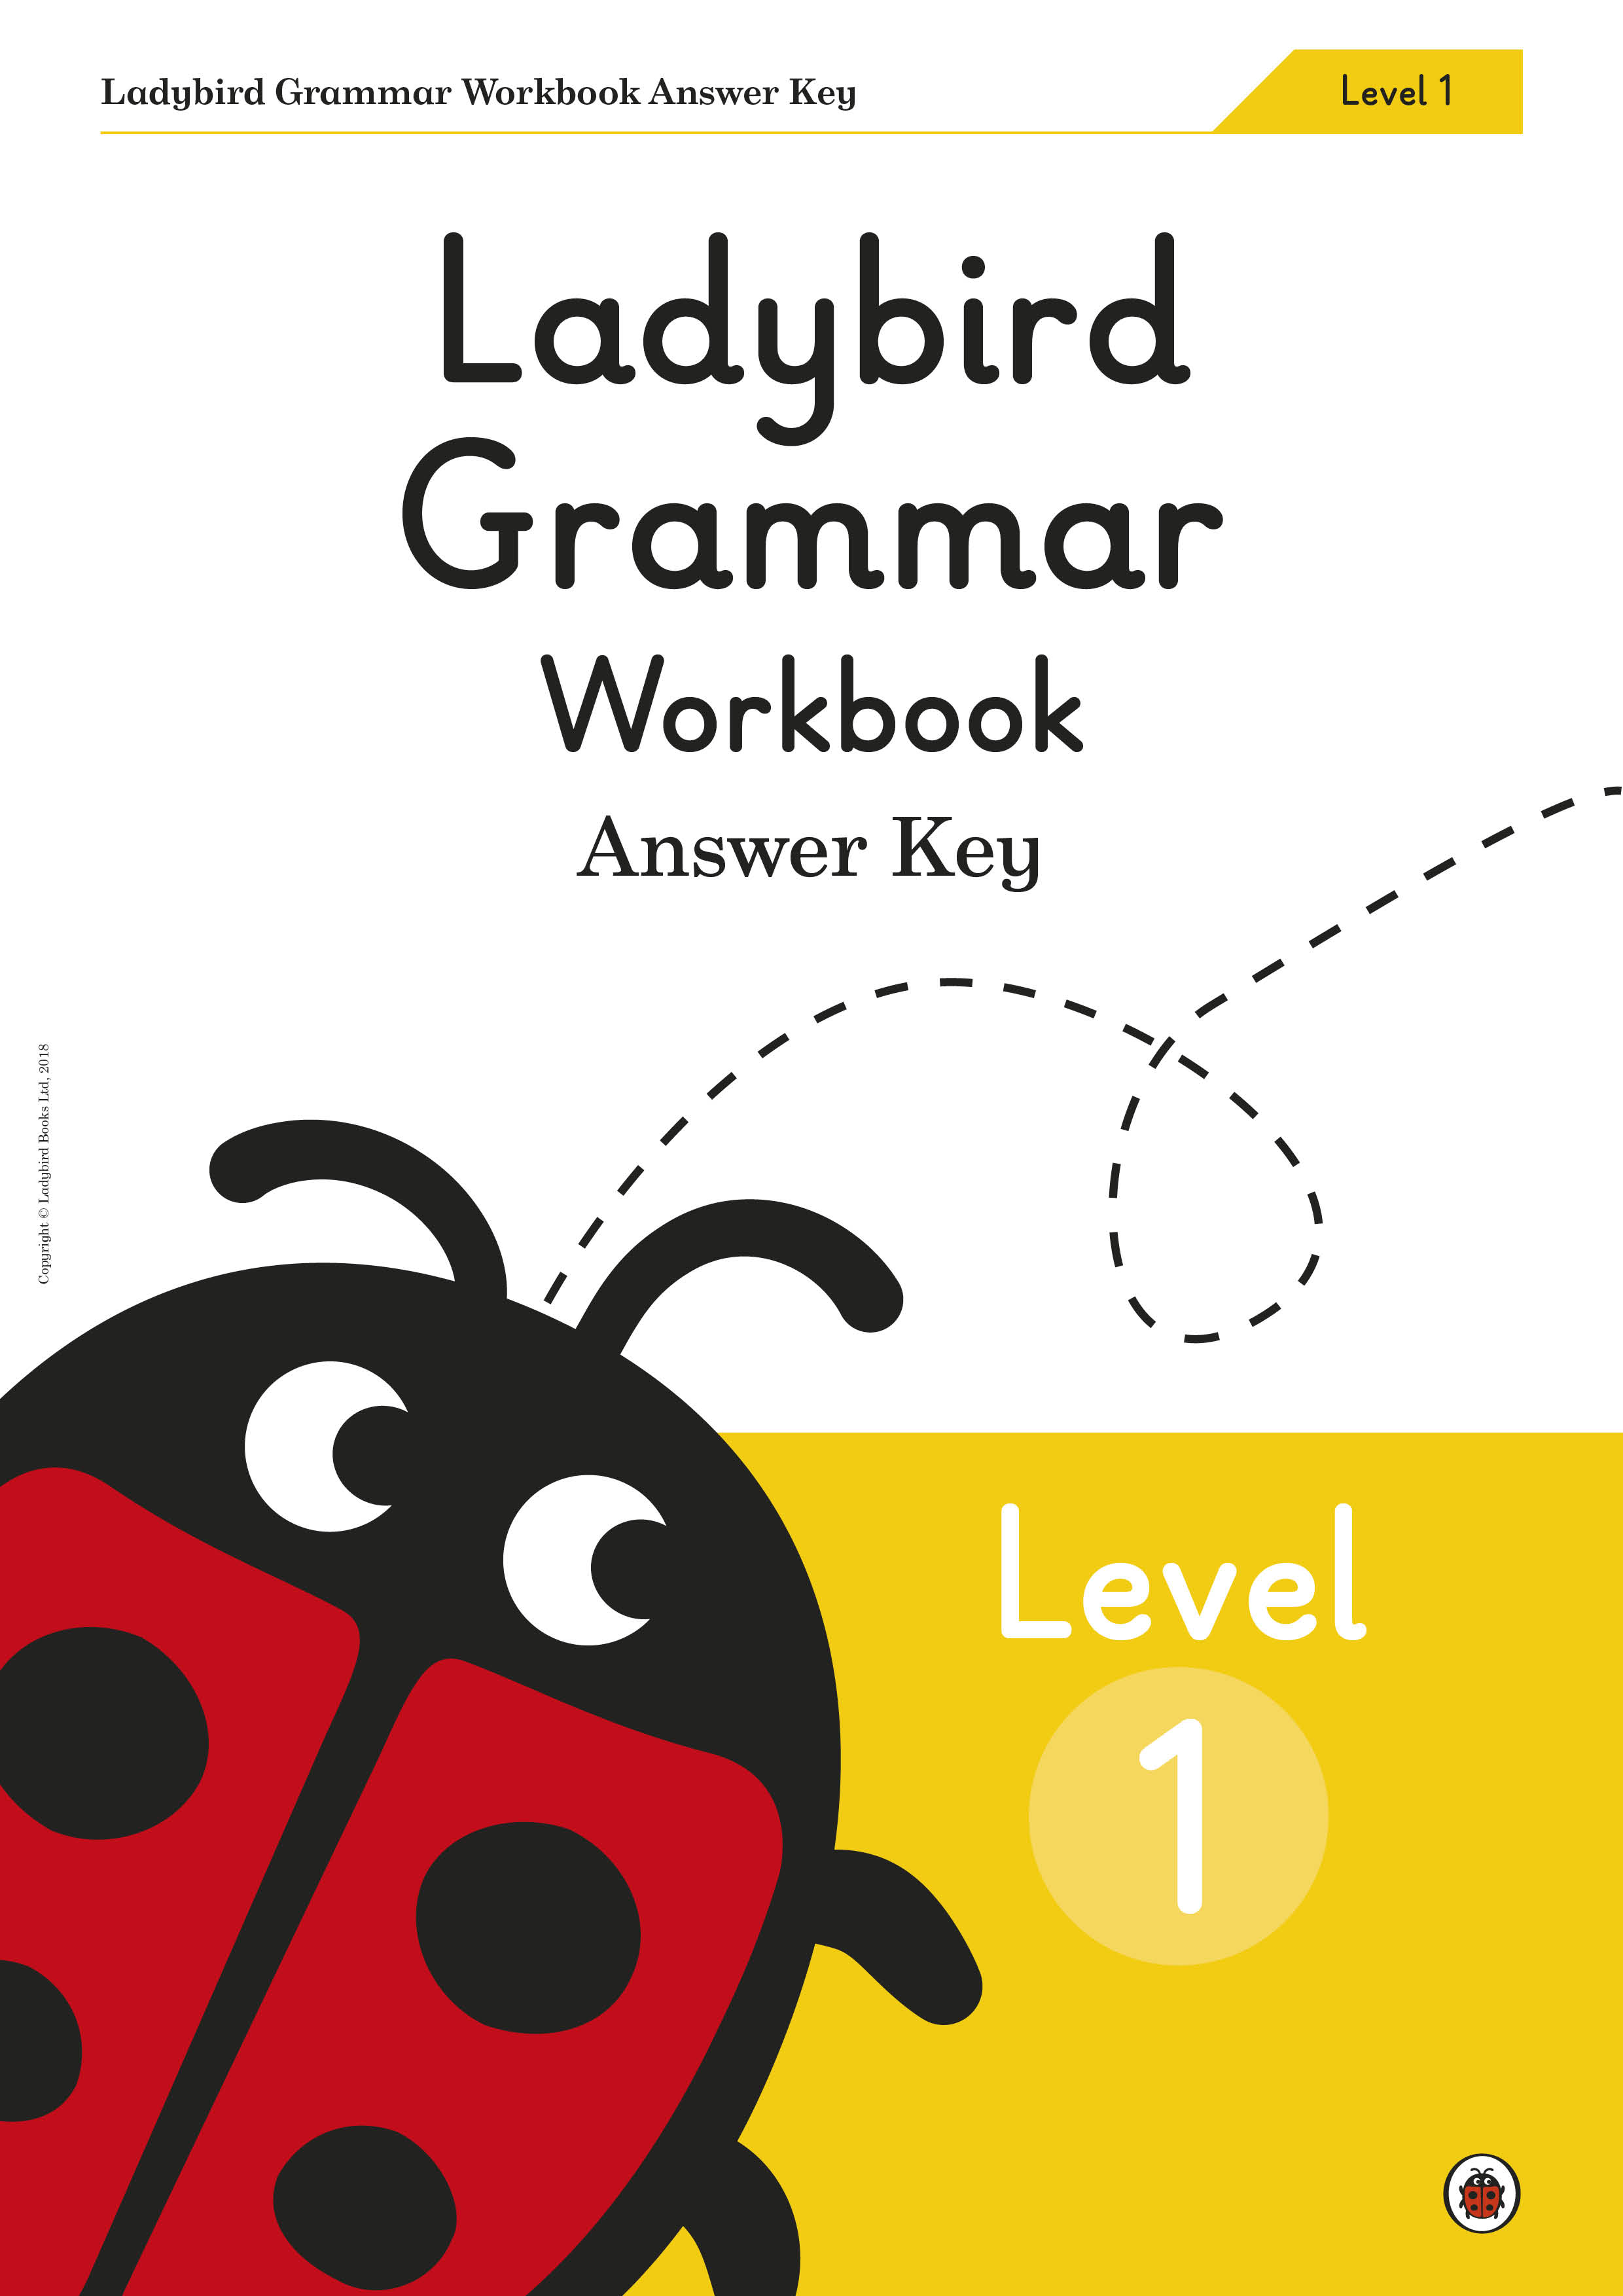 Ladybird Grammar Workbook Answer Key Level 1 - Ladybird Education